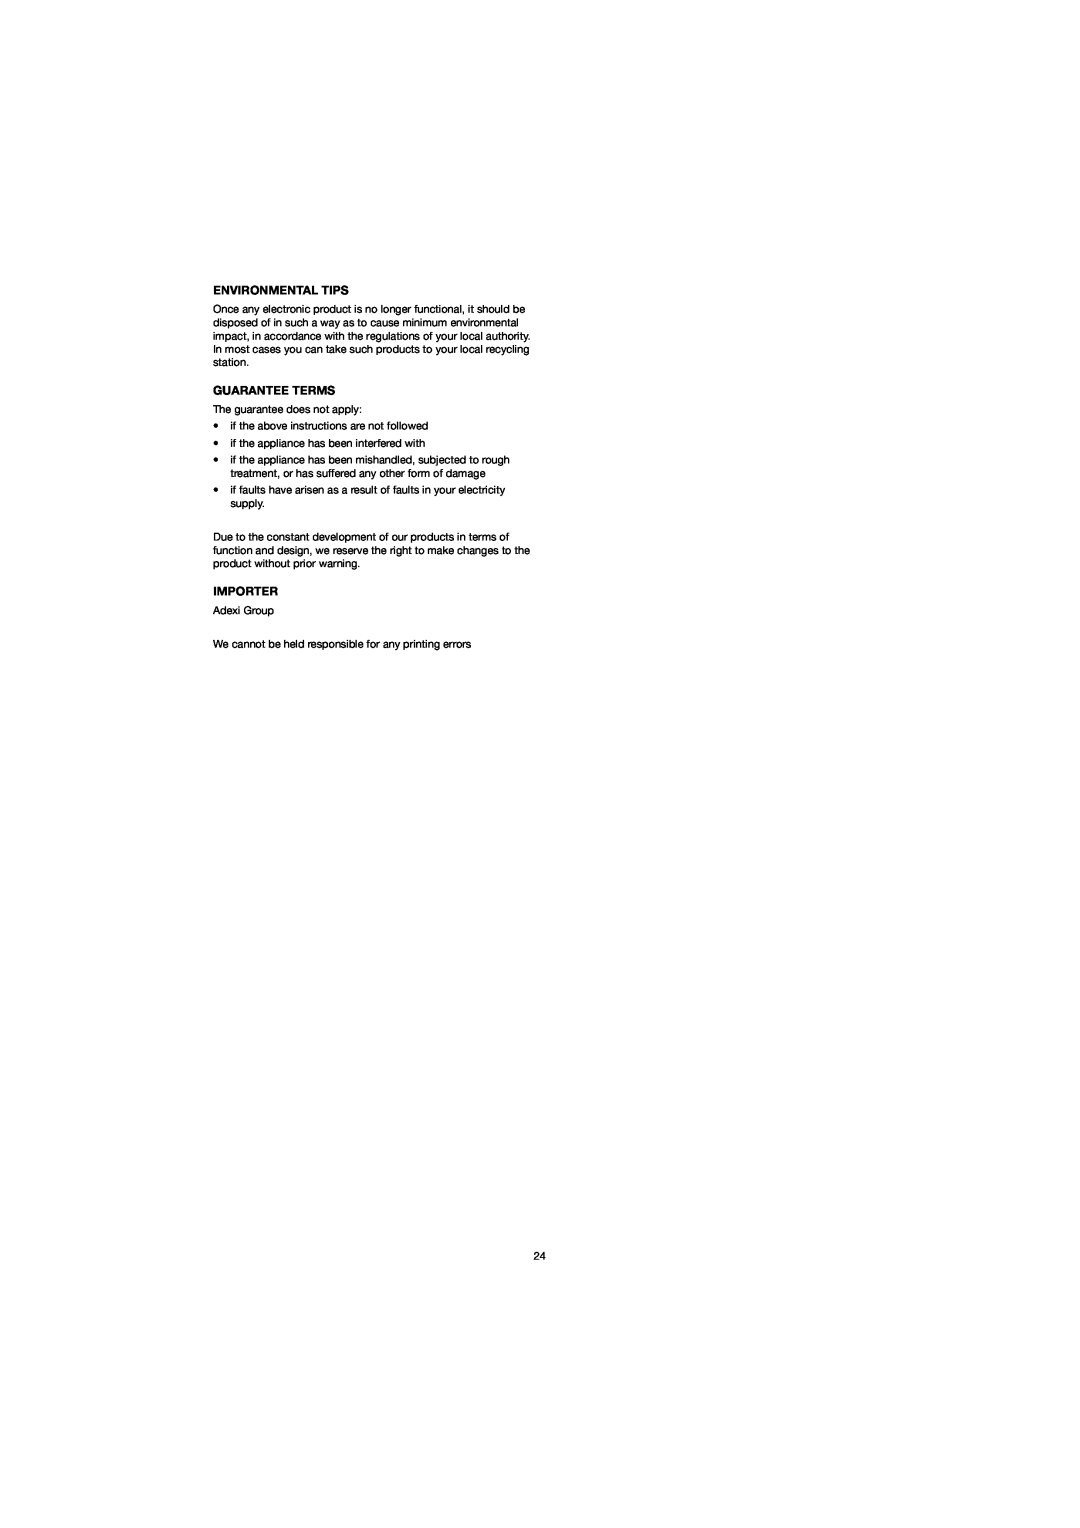 Melissa 753-094 manual Environmental Tips, Guarantee Terms, Importer 